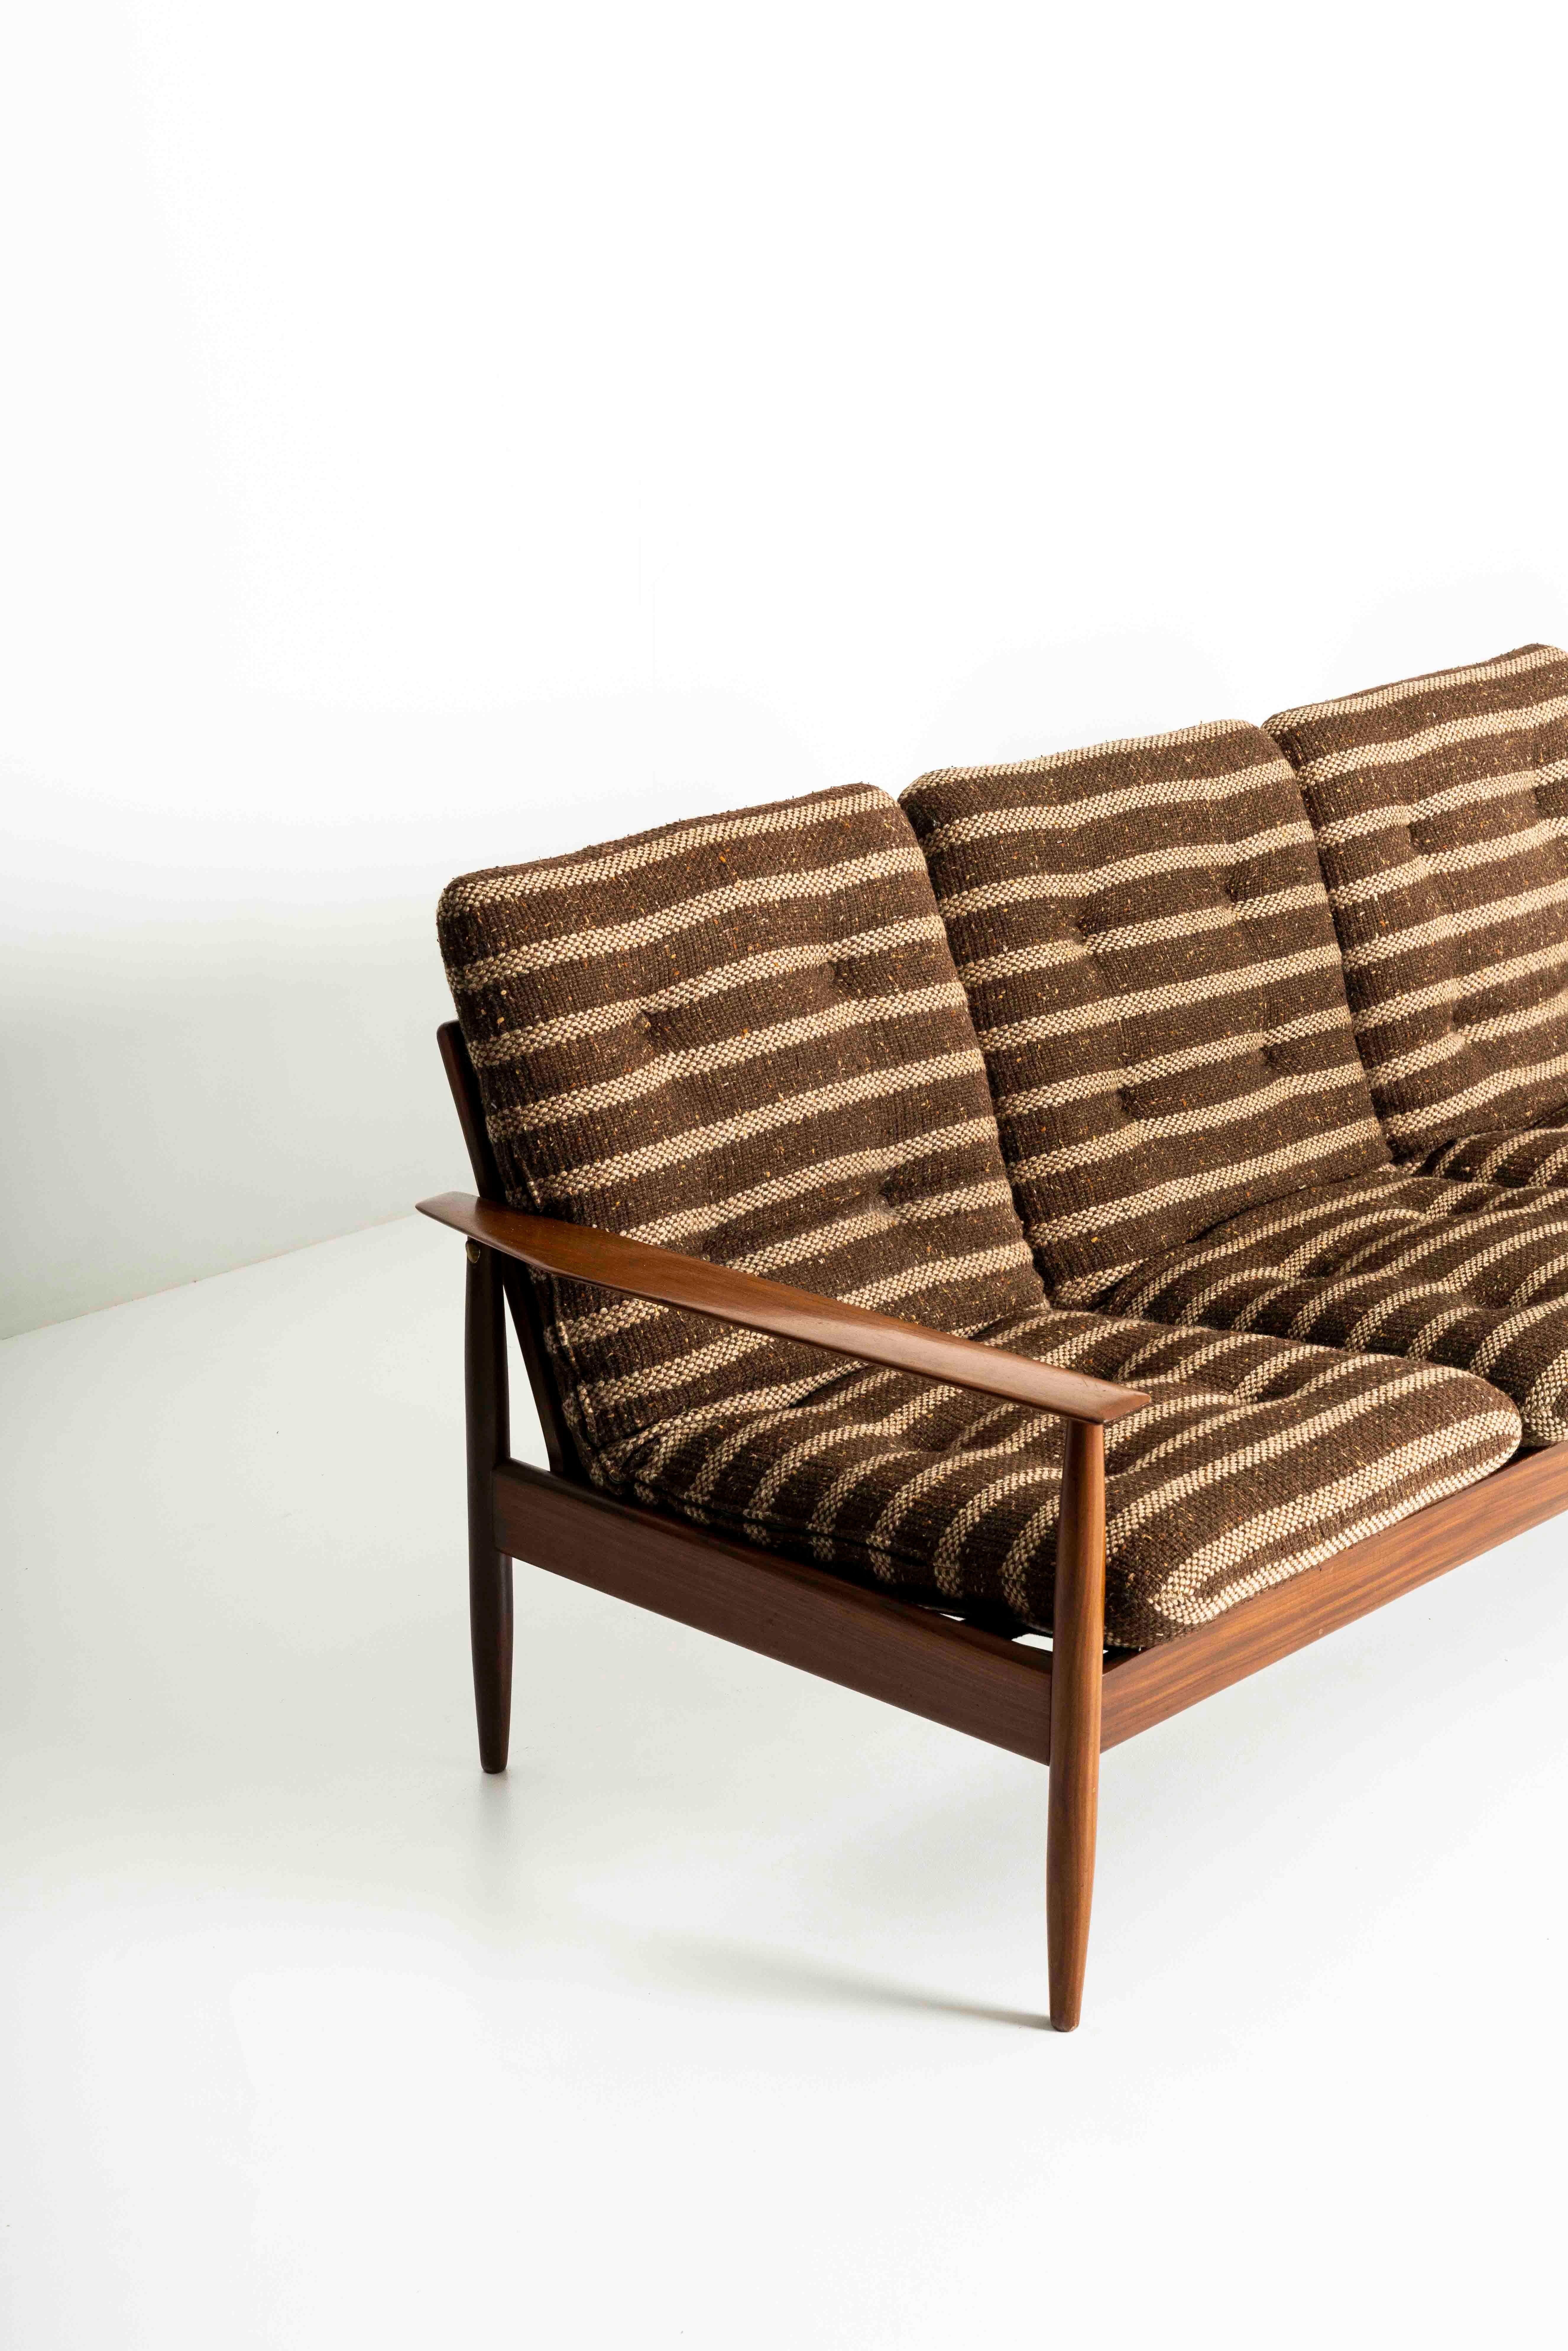 Brass Vintage Danish Sofa in the Style of Grete Jalk, 1960s Denmark